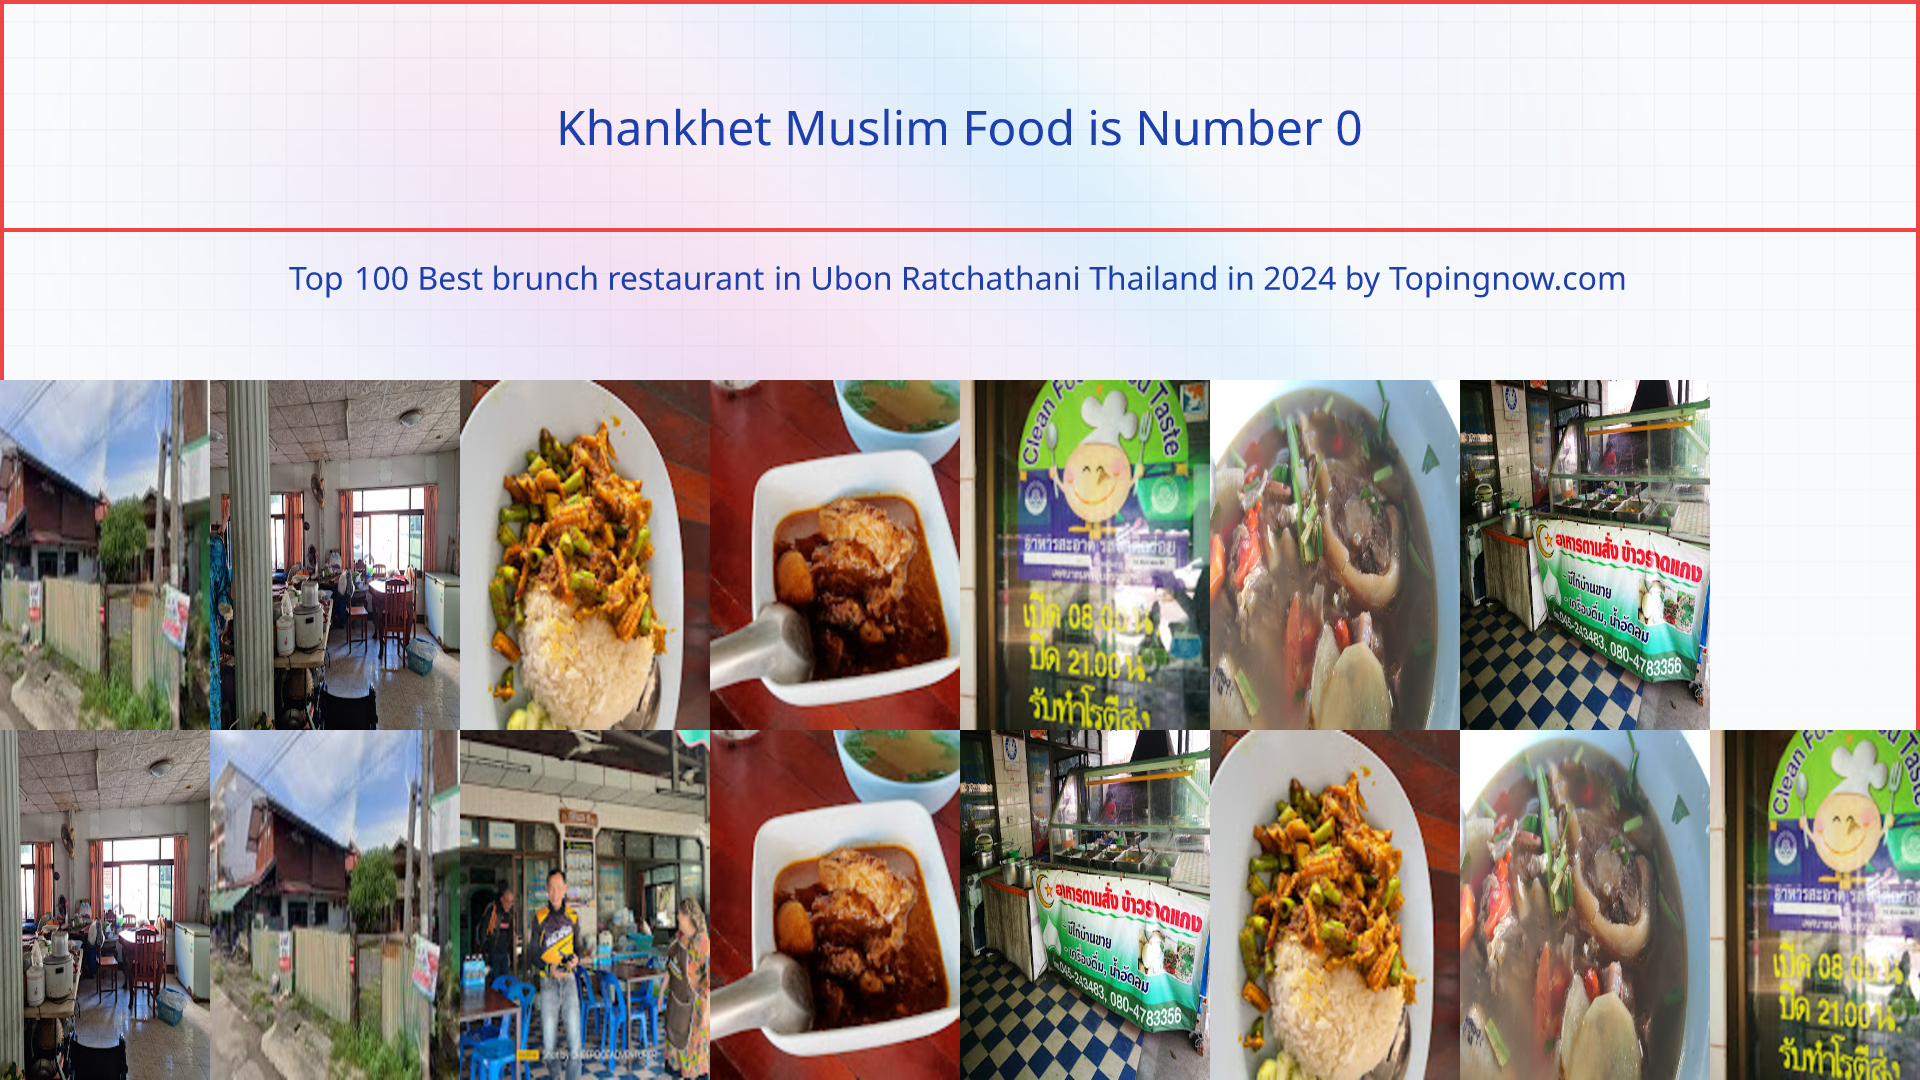 Khankhet Muslim Food: Top 100 Best brunch restaurant in Ubon Ratchathani Thailand in 2024